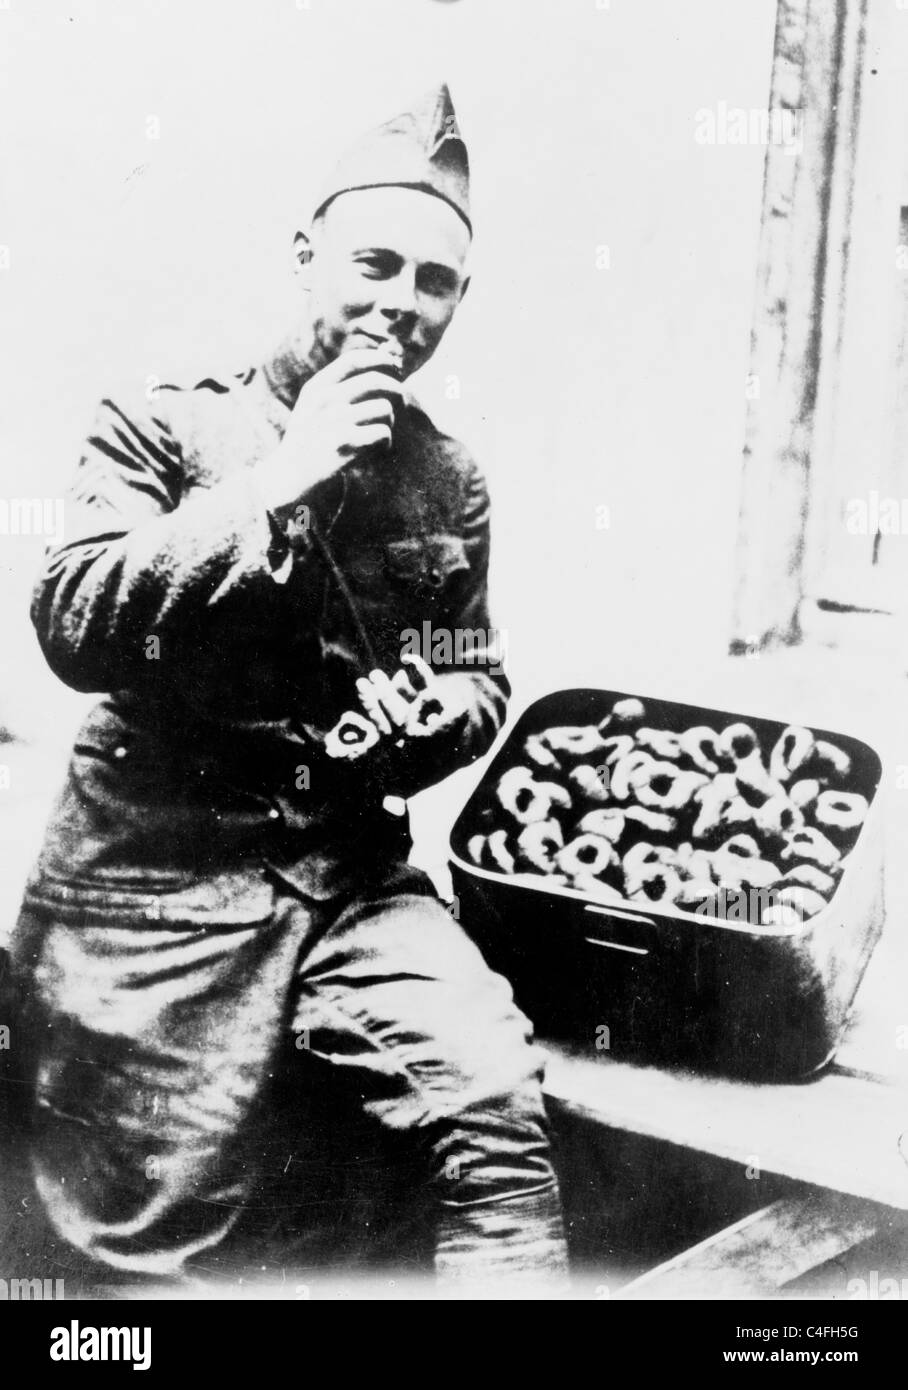 U.S. soldier eating doughnuts (circa 1910 - 1920) Stock Photo